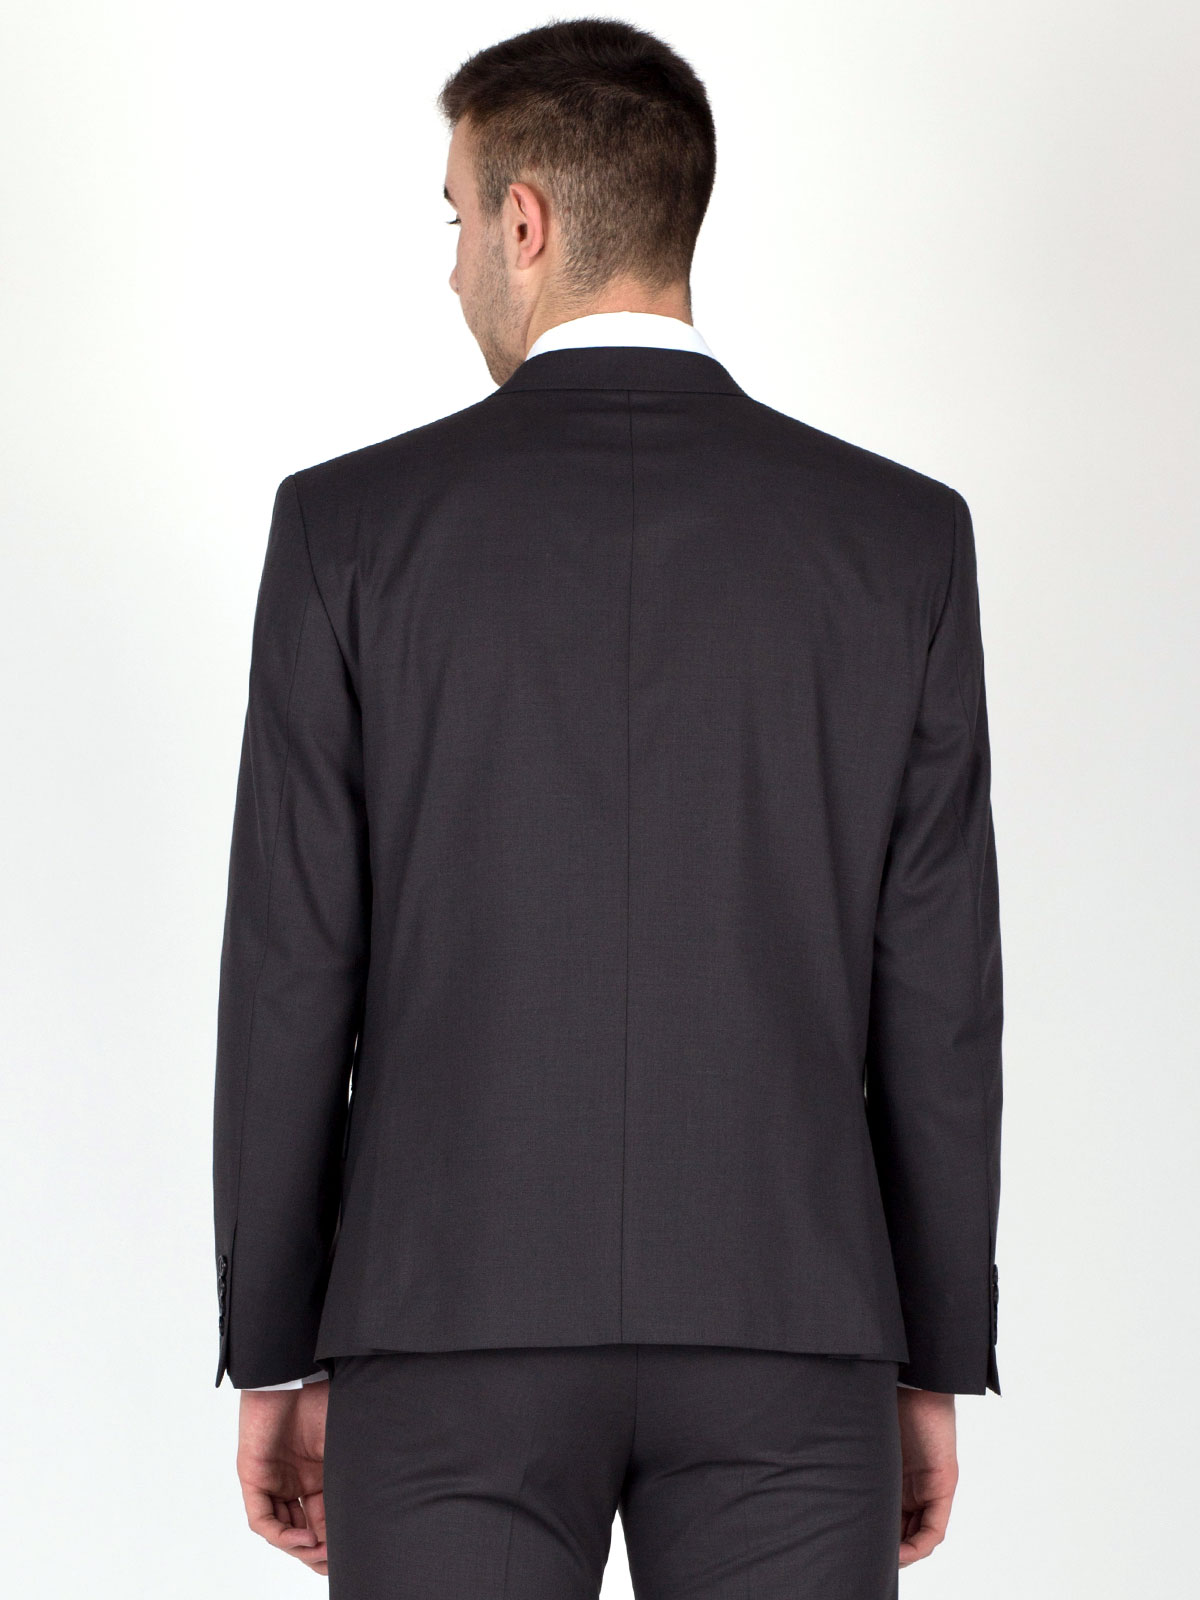 Graphite elegant jacket - 64060 € 101.24 img2